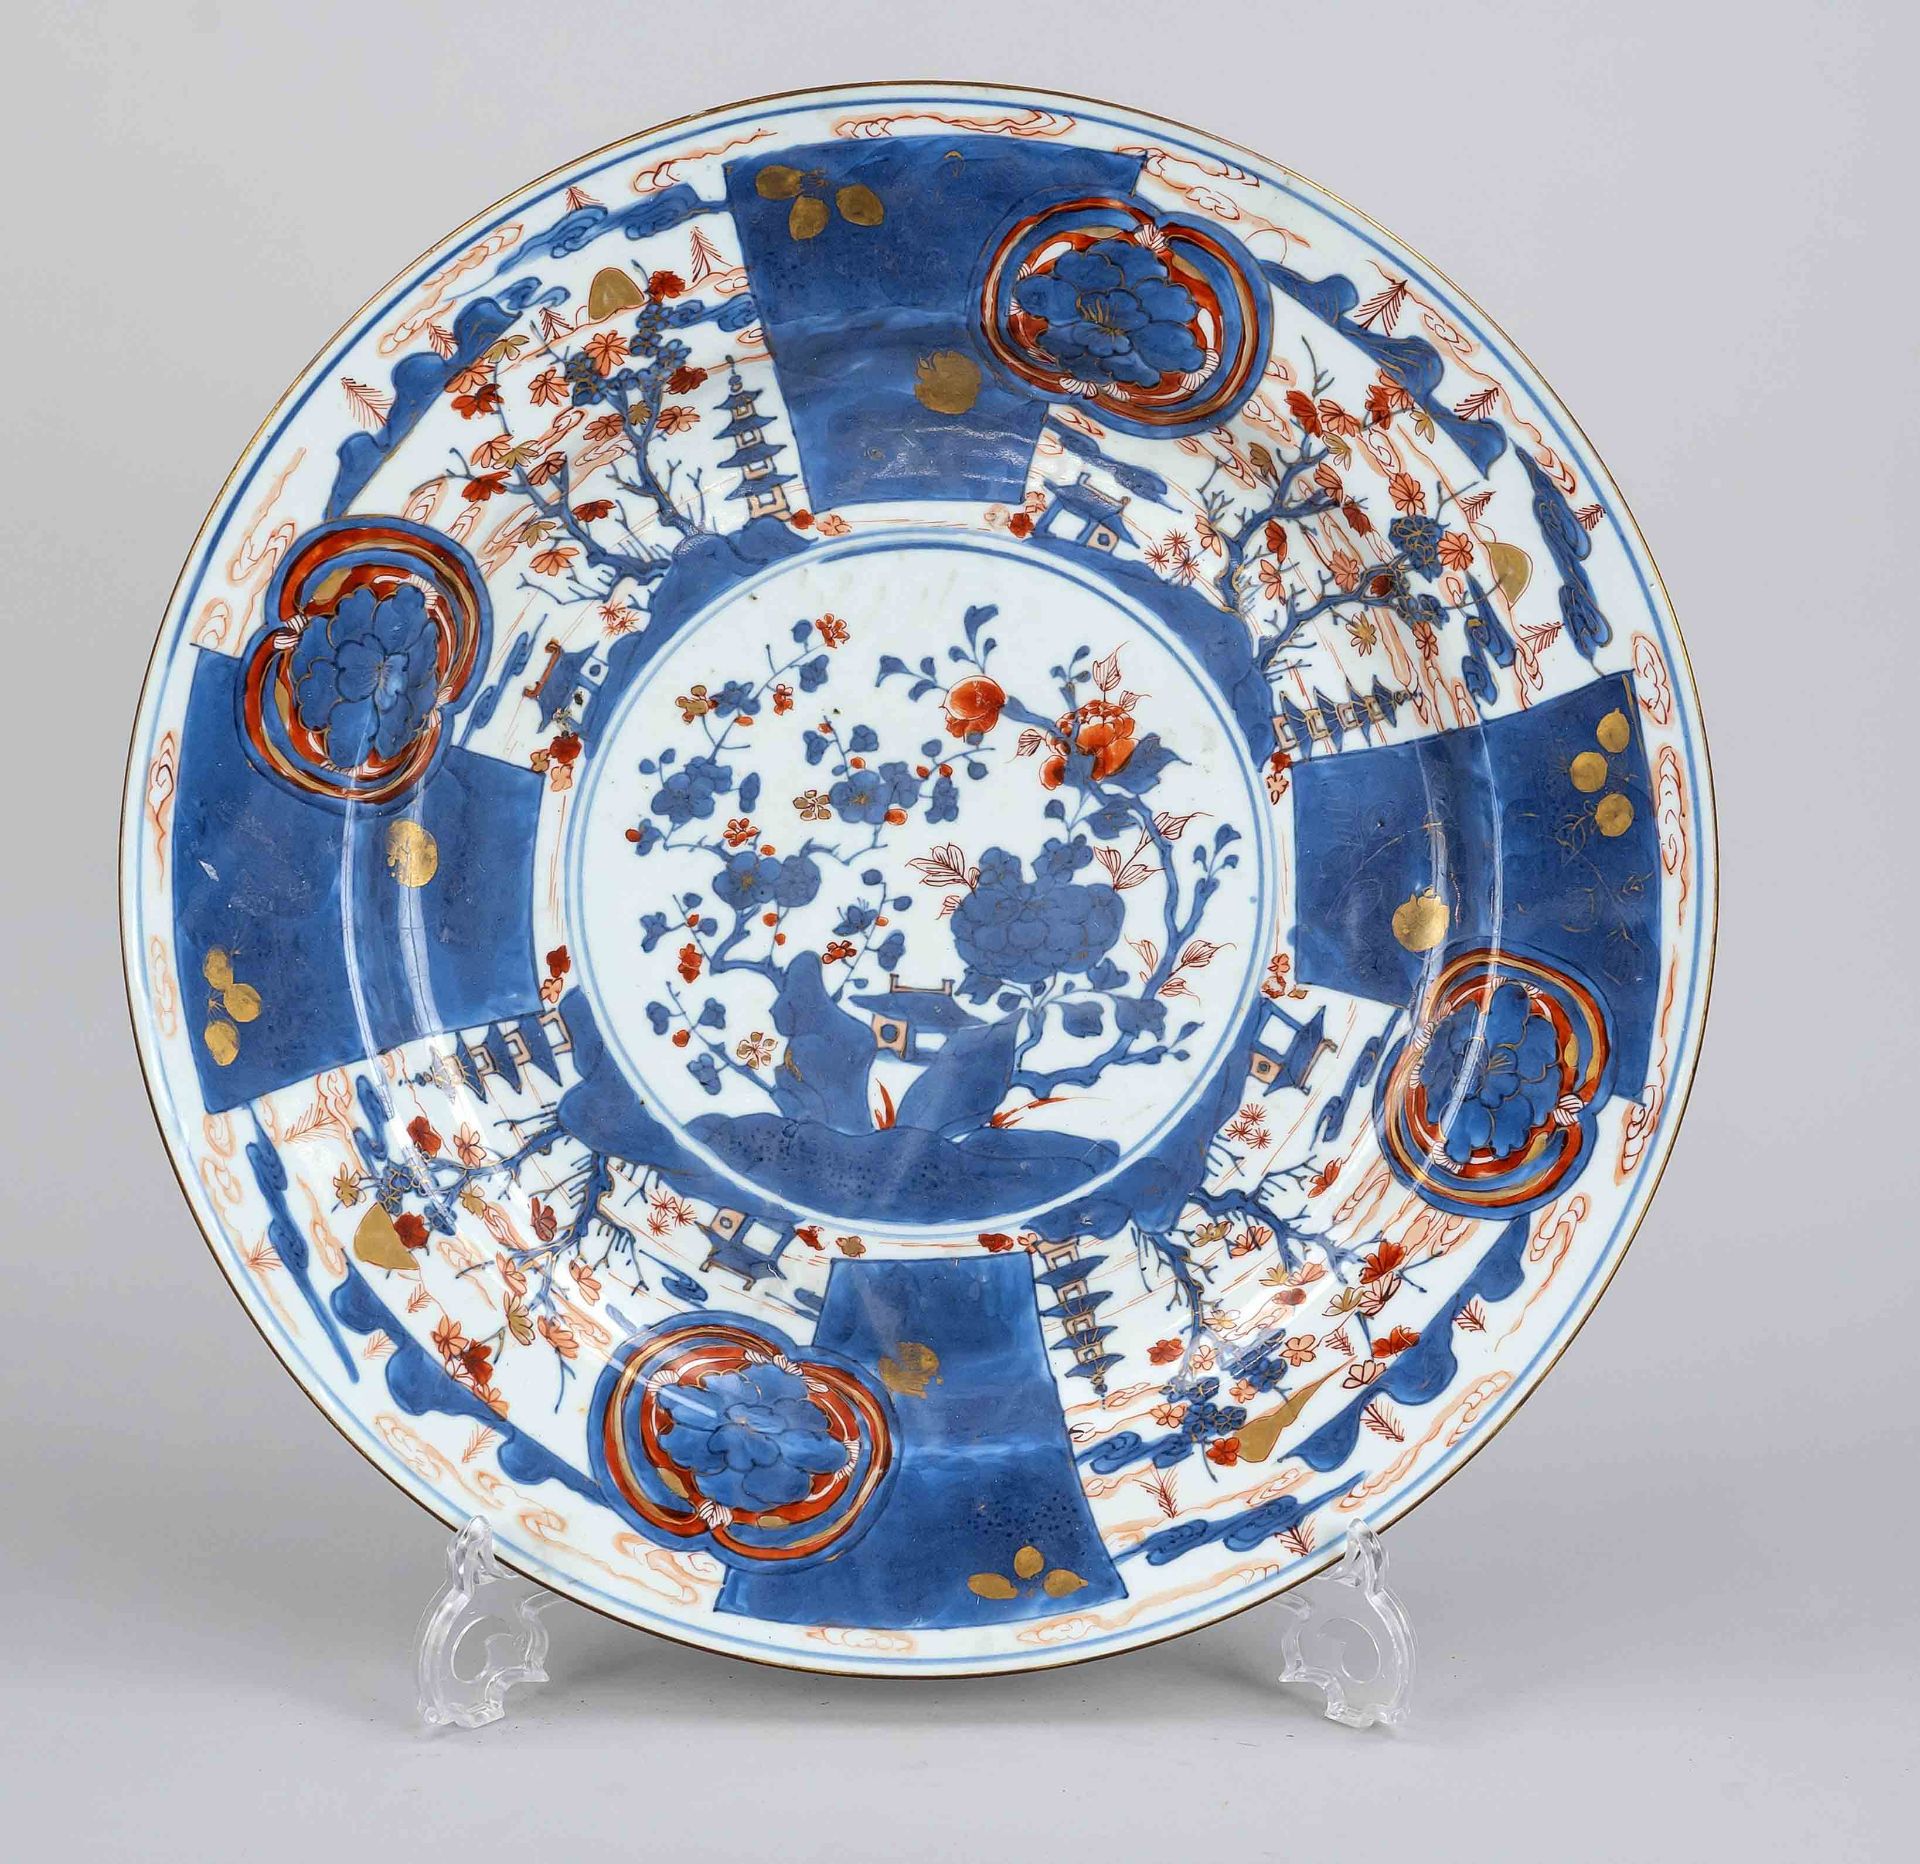 Large Chinese Imari plate, China, Qing dynasty(1644-1911), c1700, porcelain with polychrome glaze